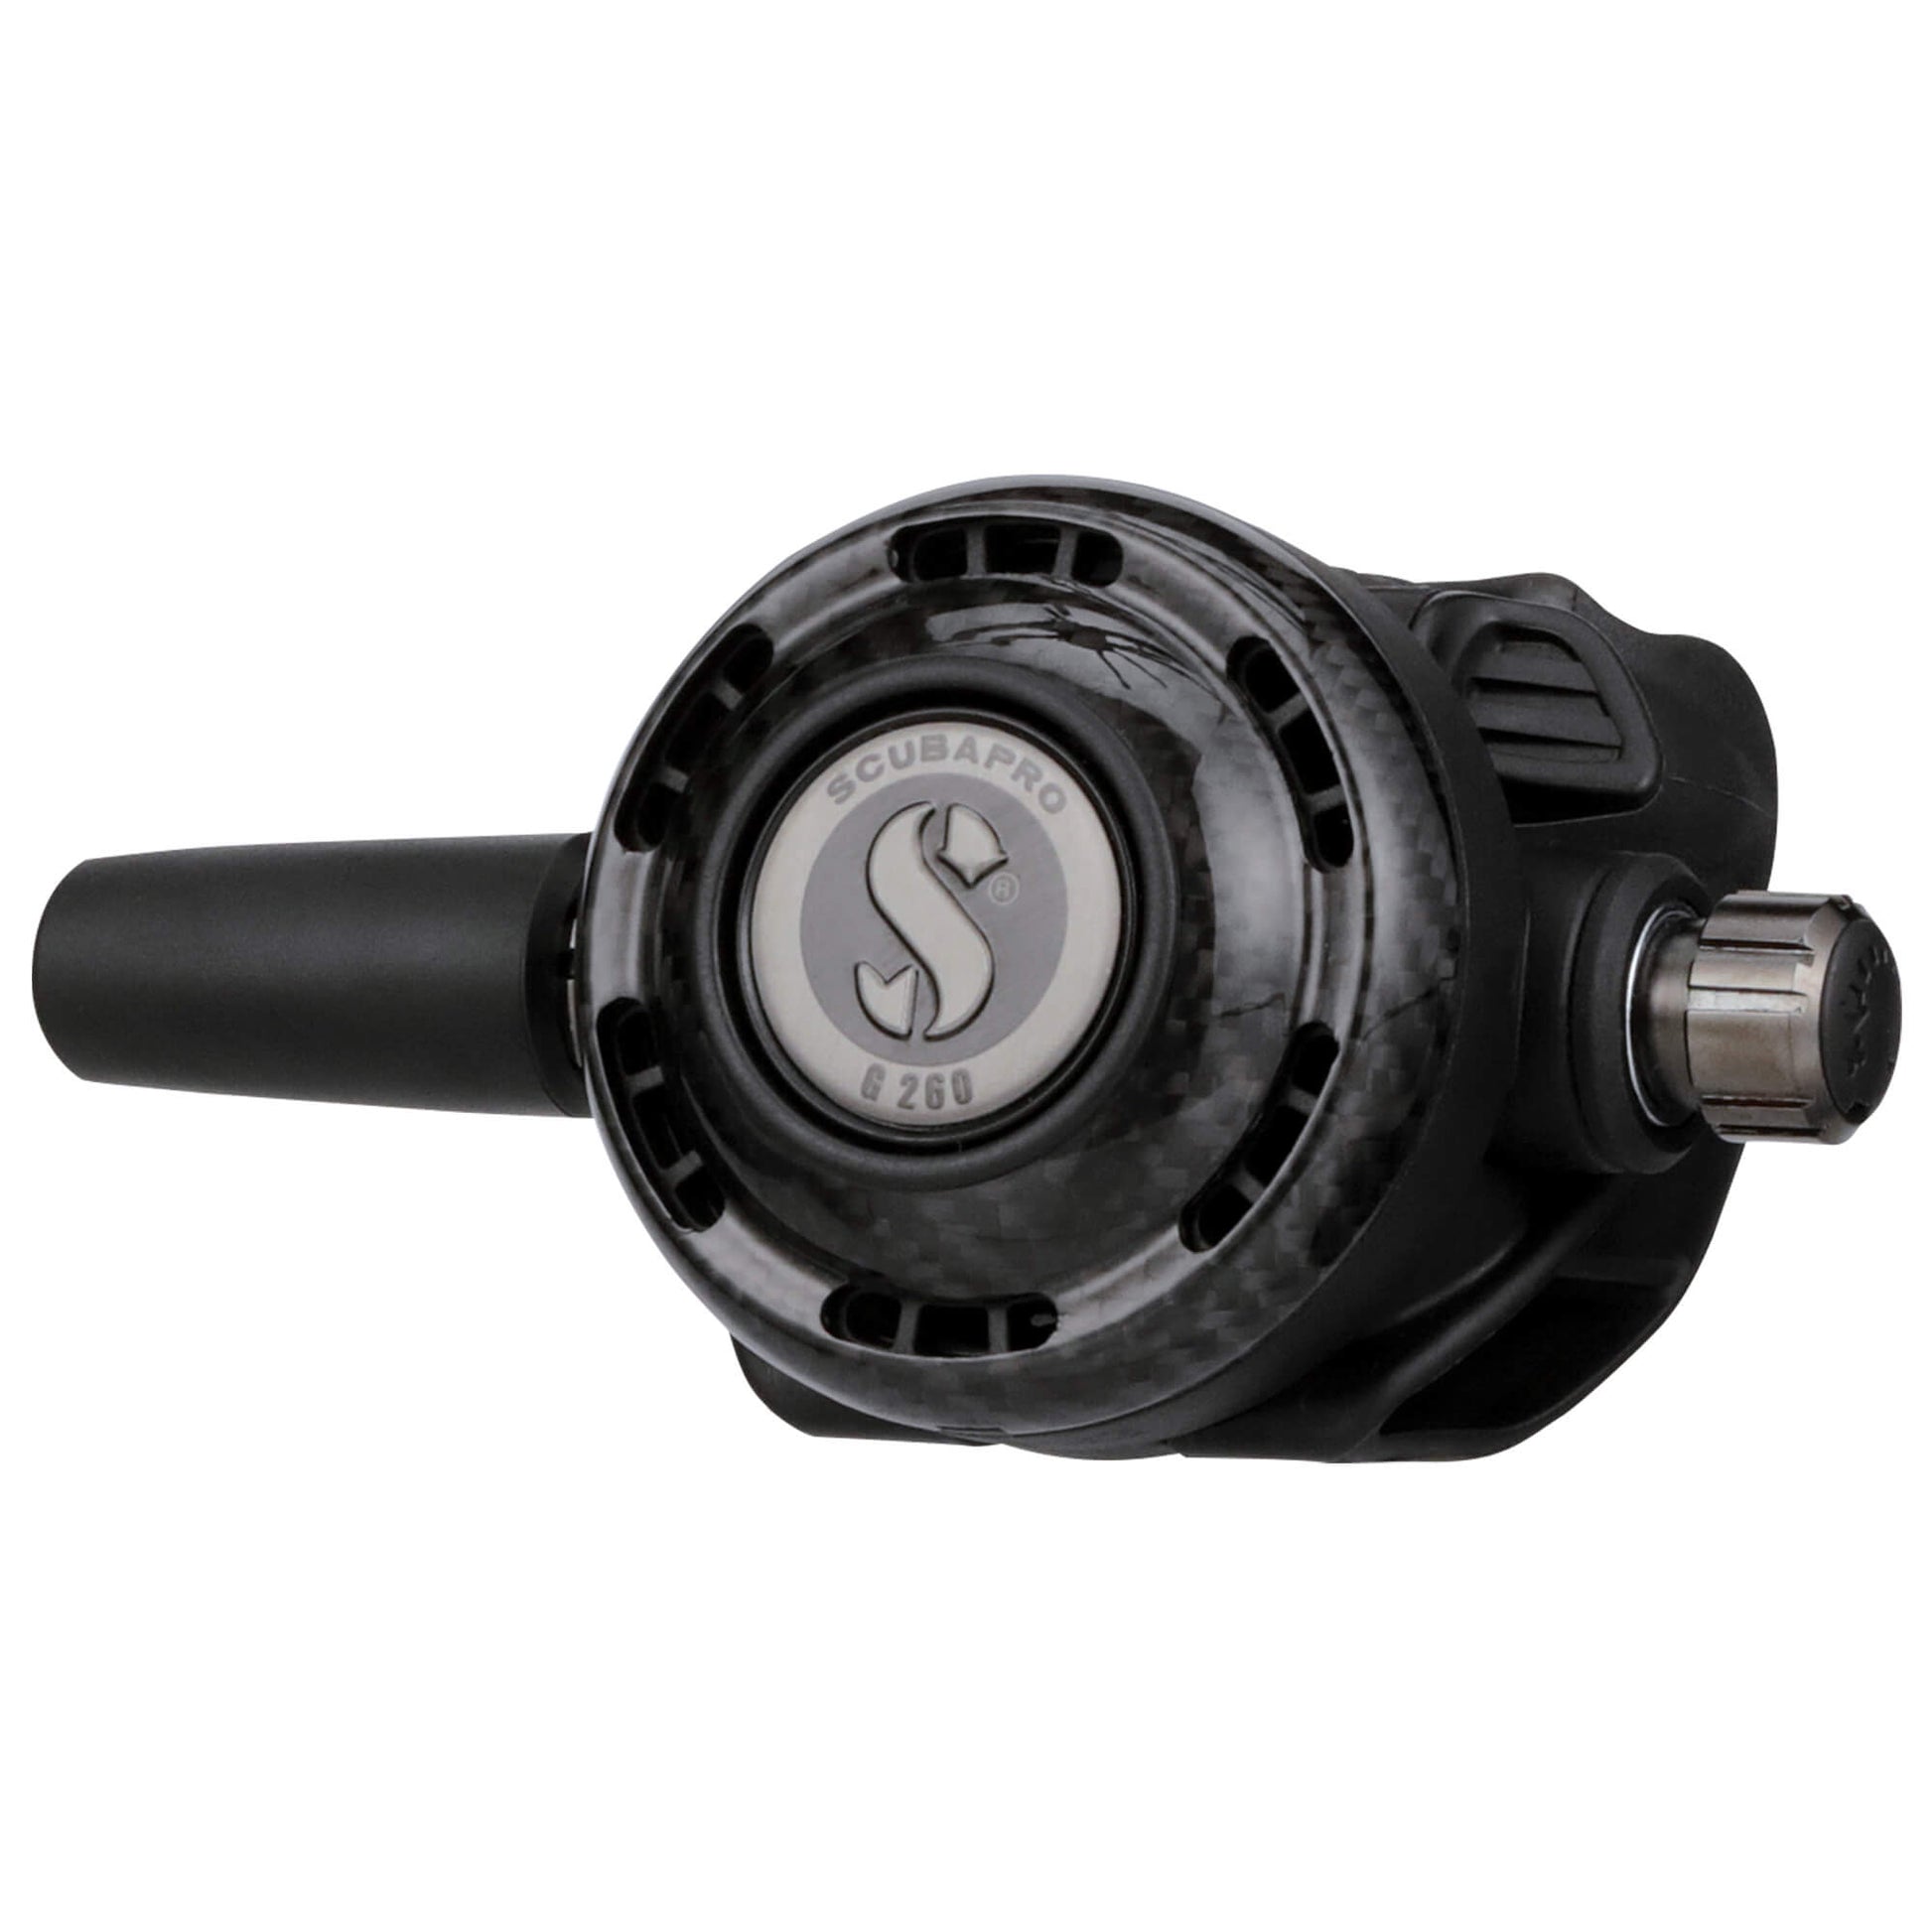 Scubapro MK19 EVO G260 Carbon Black Tech Regulator